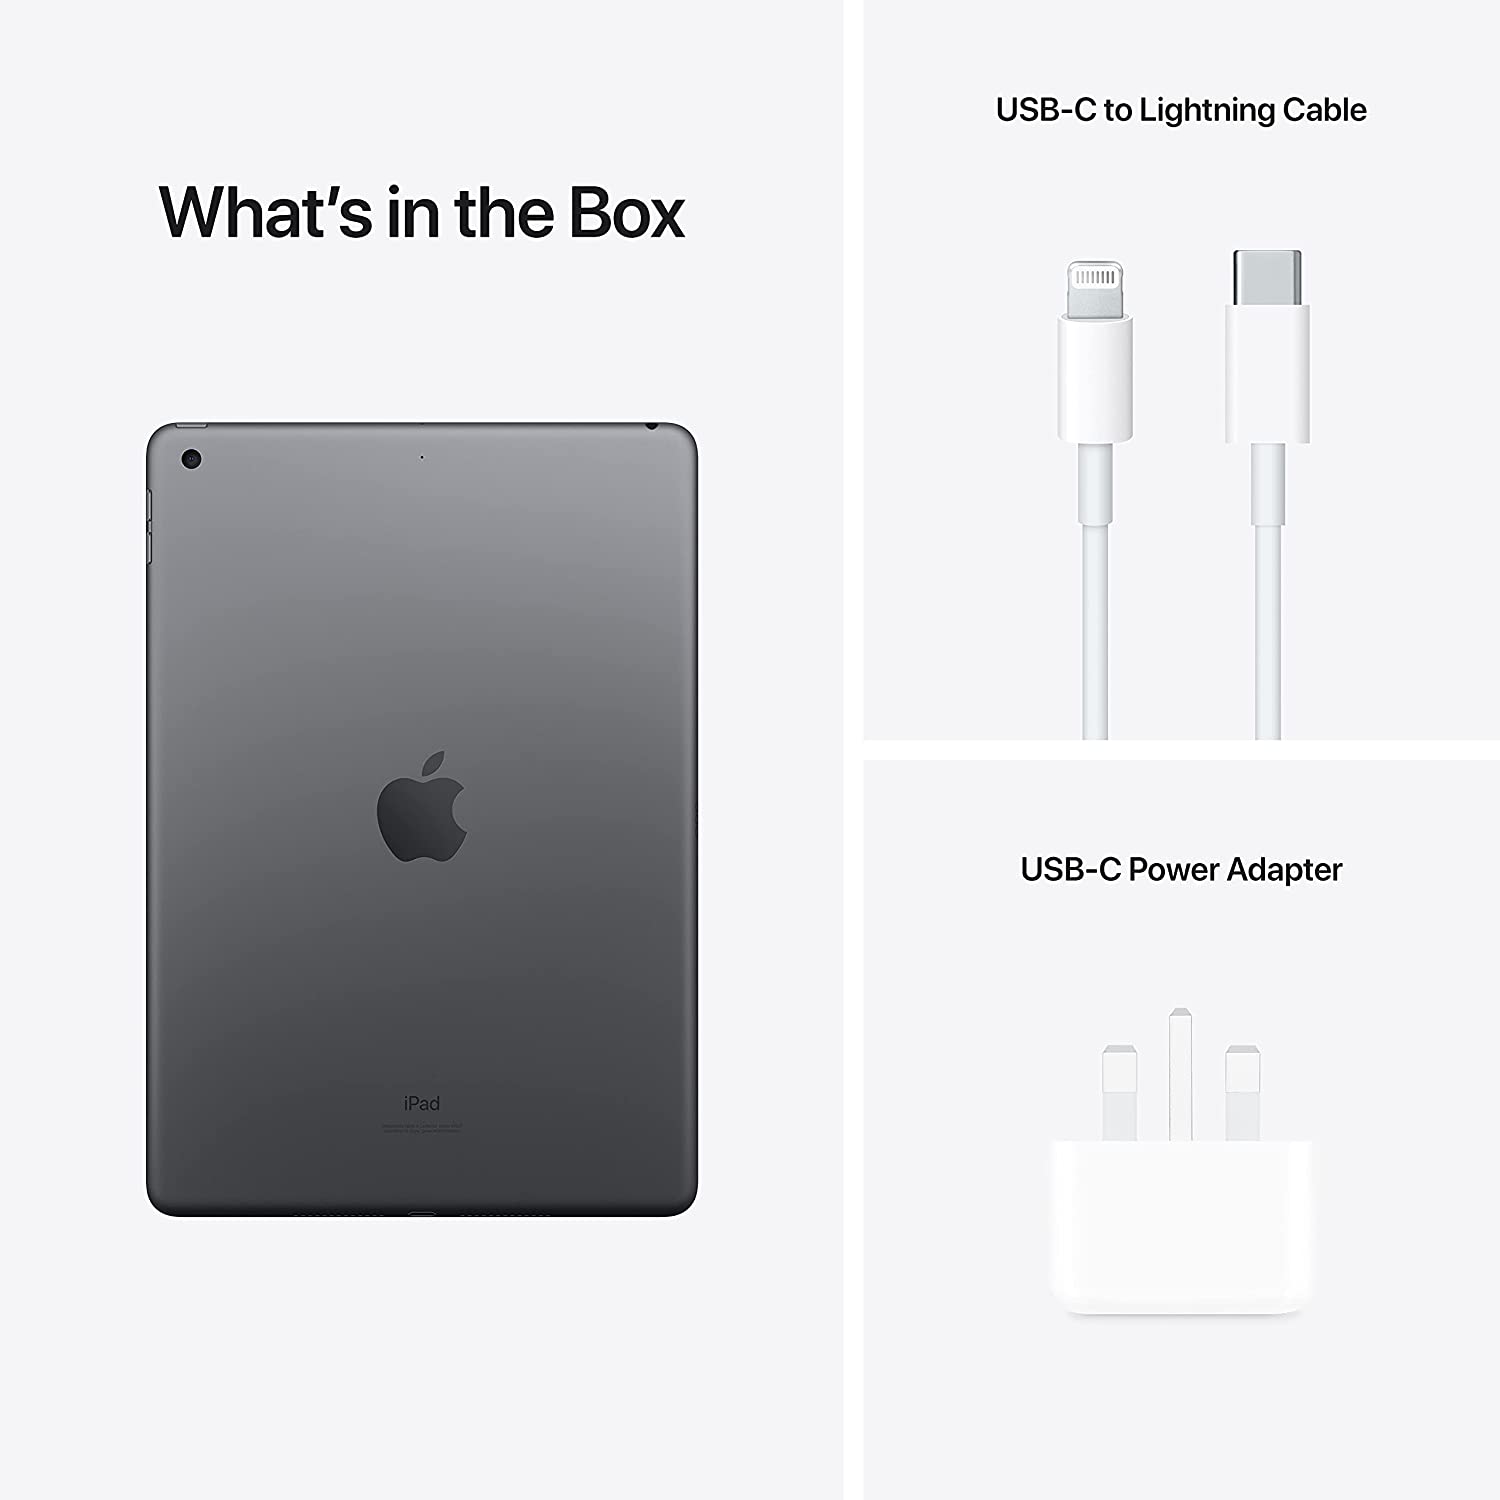 New 2021 Apple iPad (10.2-inch, Wi-Fi, 64GB) - Space Grey (9th Generation)